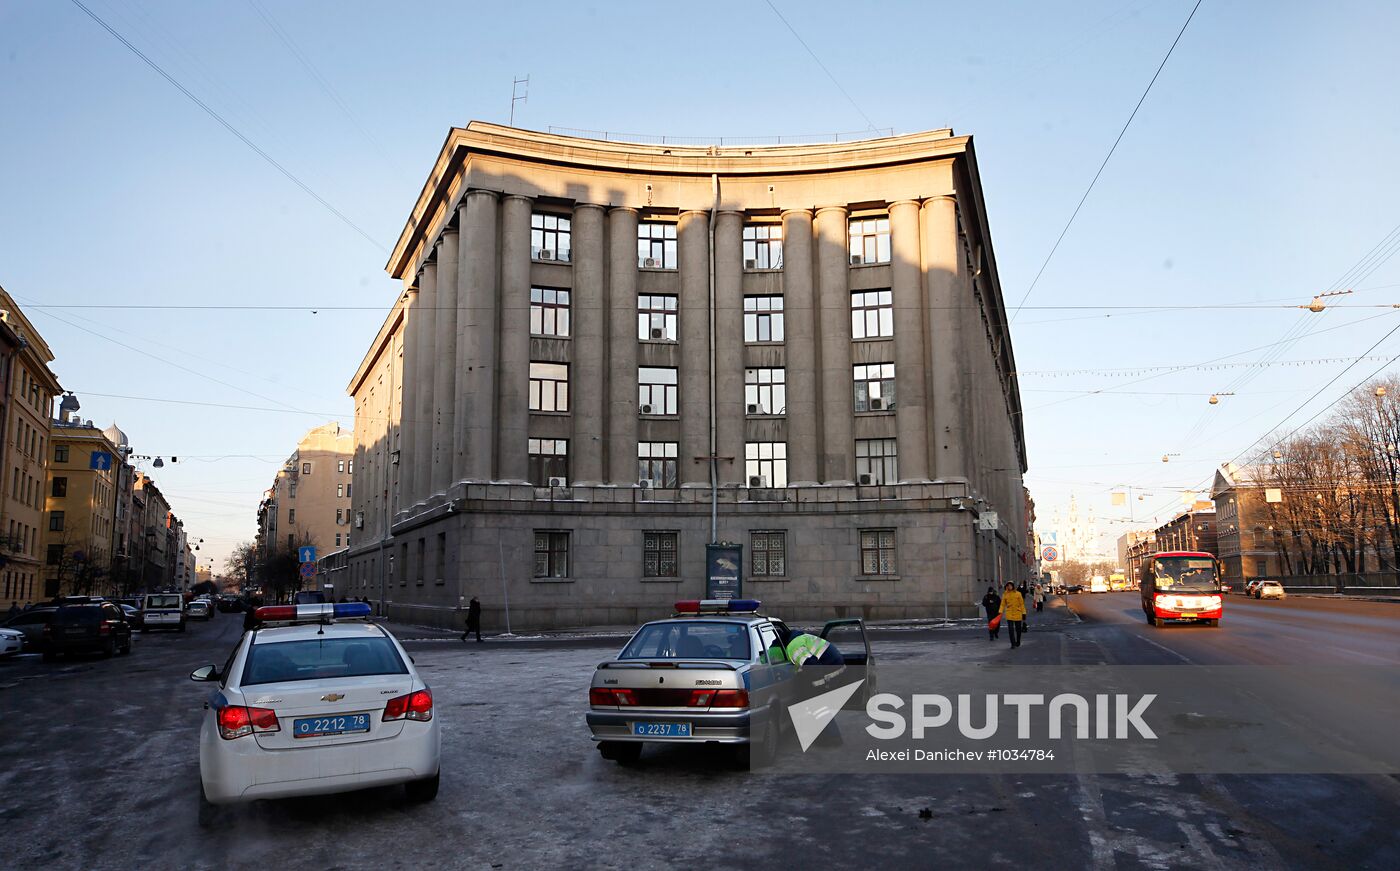 Russian police building for St. Petersburg and Leningrad region